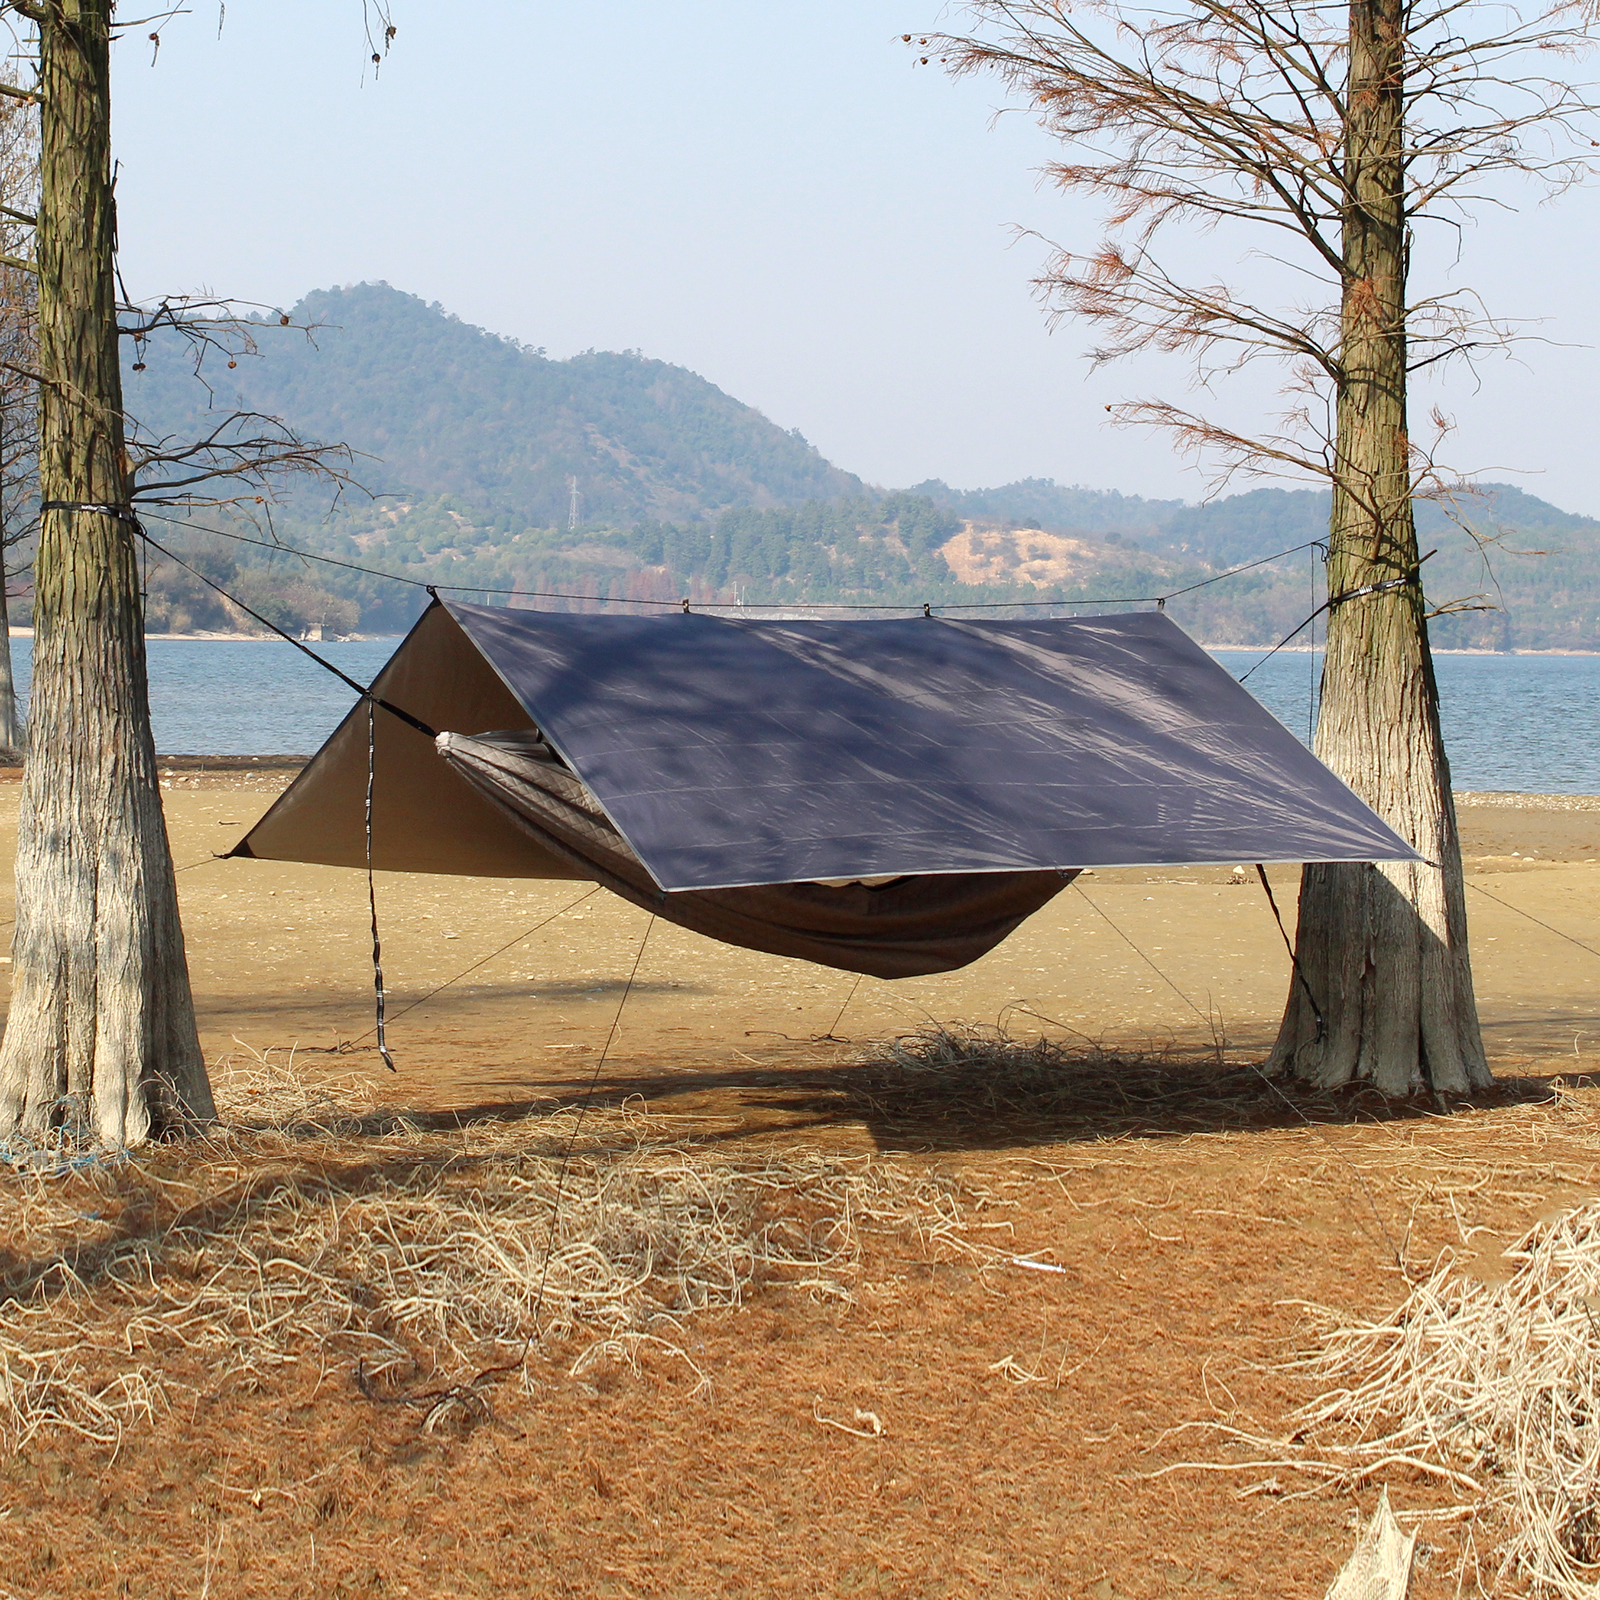 Sunyear Hammock Camping with Rain Fly Tarp and Net, Portable Camping  Hammock Double Tree Hammock Outdoor Indoor Backpacking Travel & Survival, 2  Tree